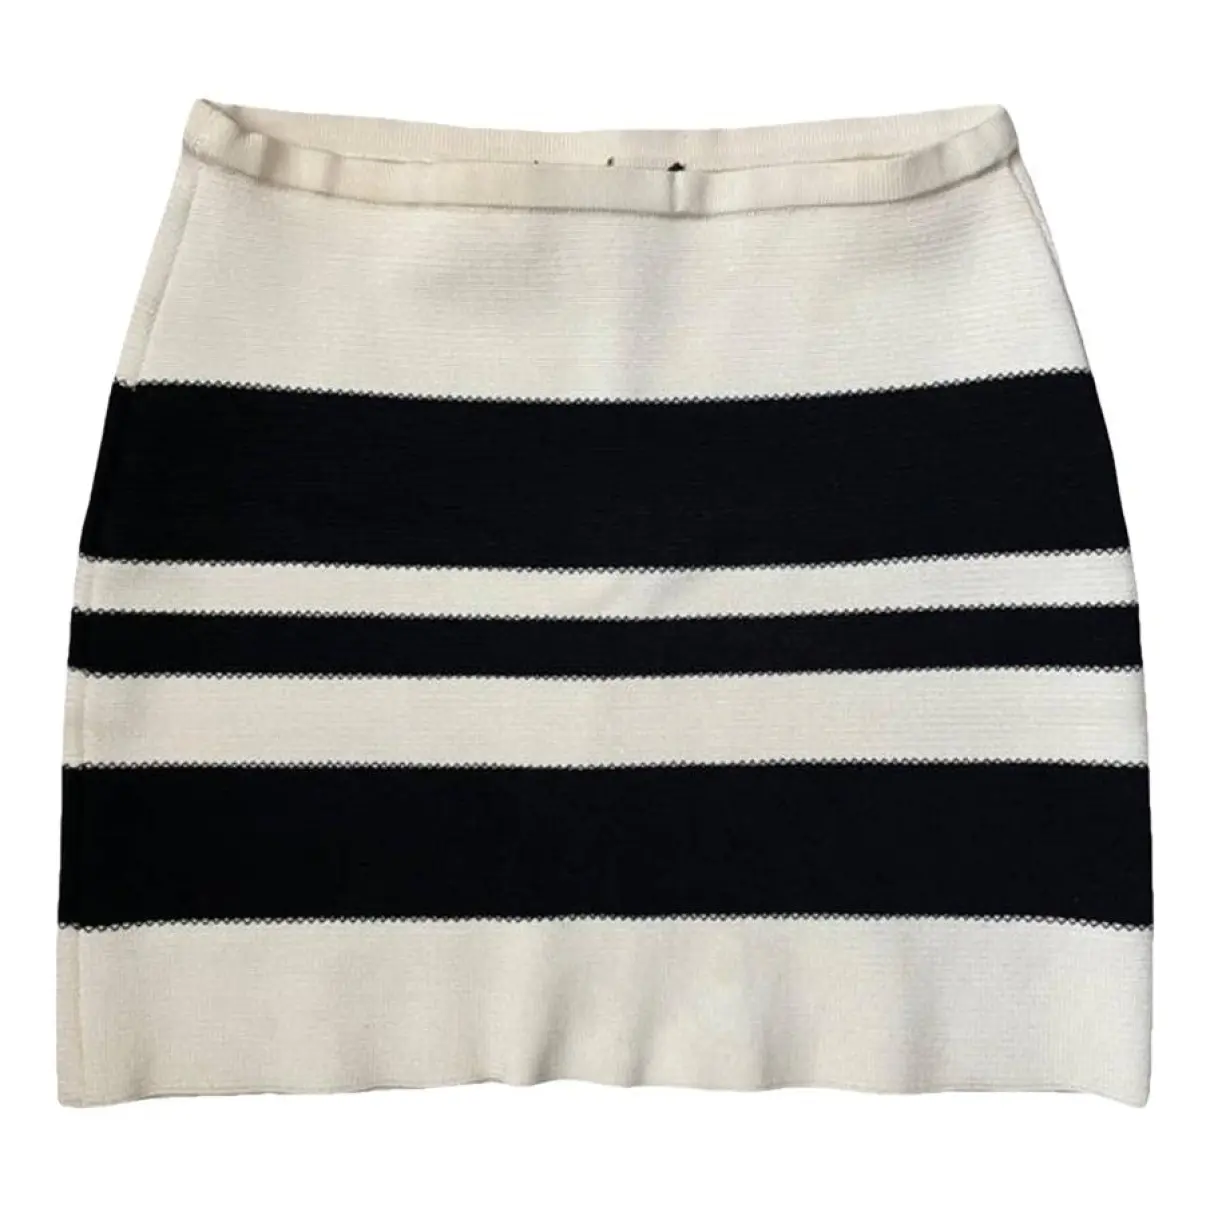 Mini skirt Gianfranco Ferré - Vintage